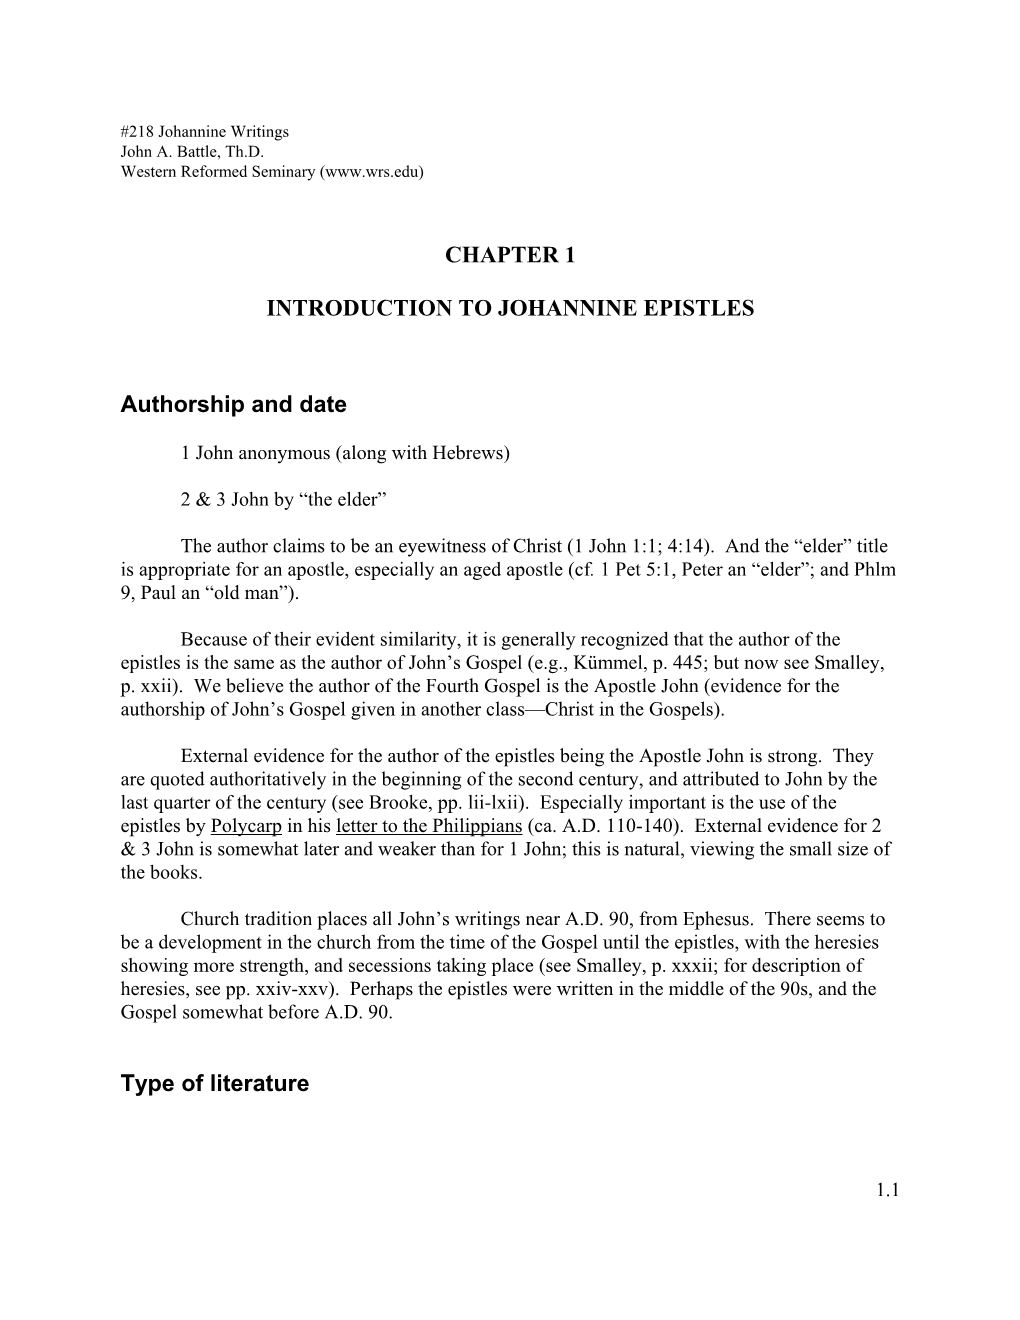 CHAPTER 1 INTRODUCTION to JOHANNINE EPISTLES Authorship